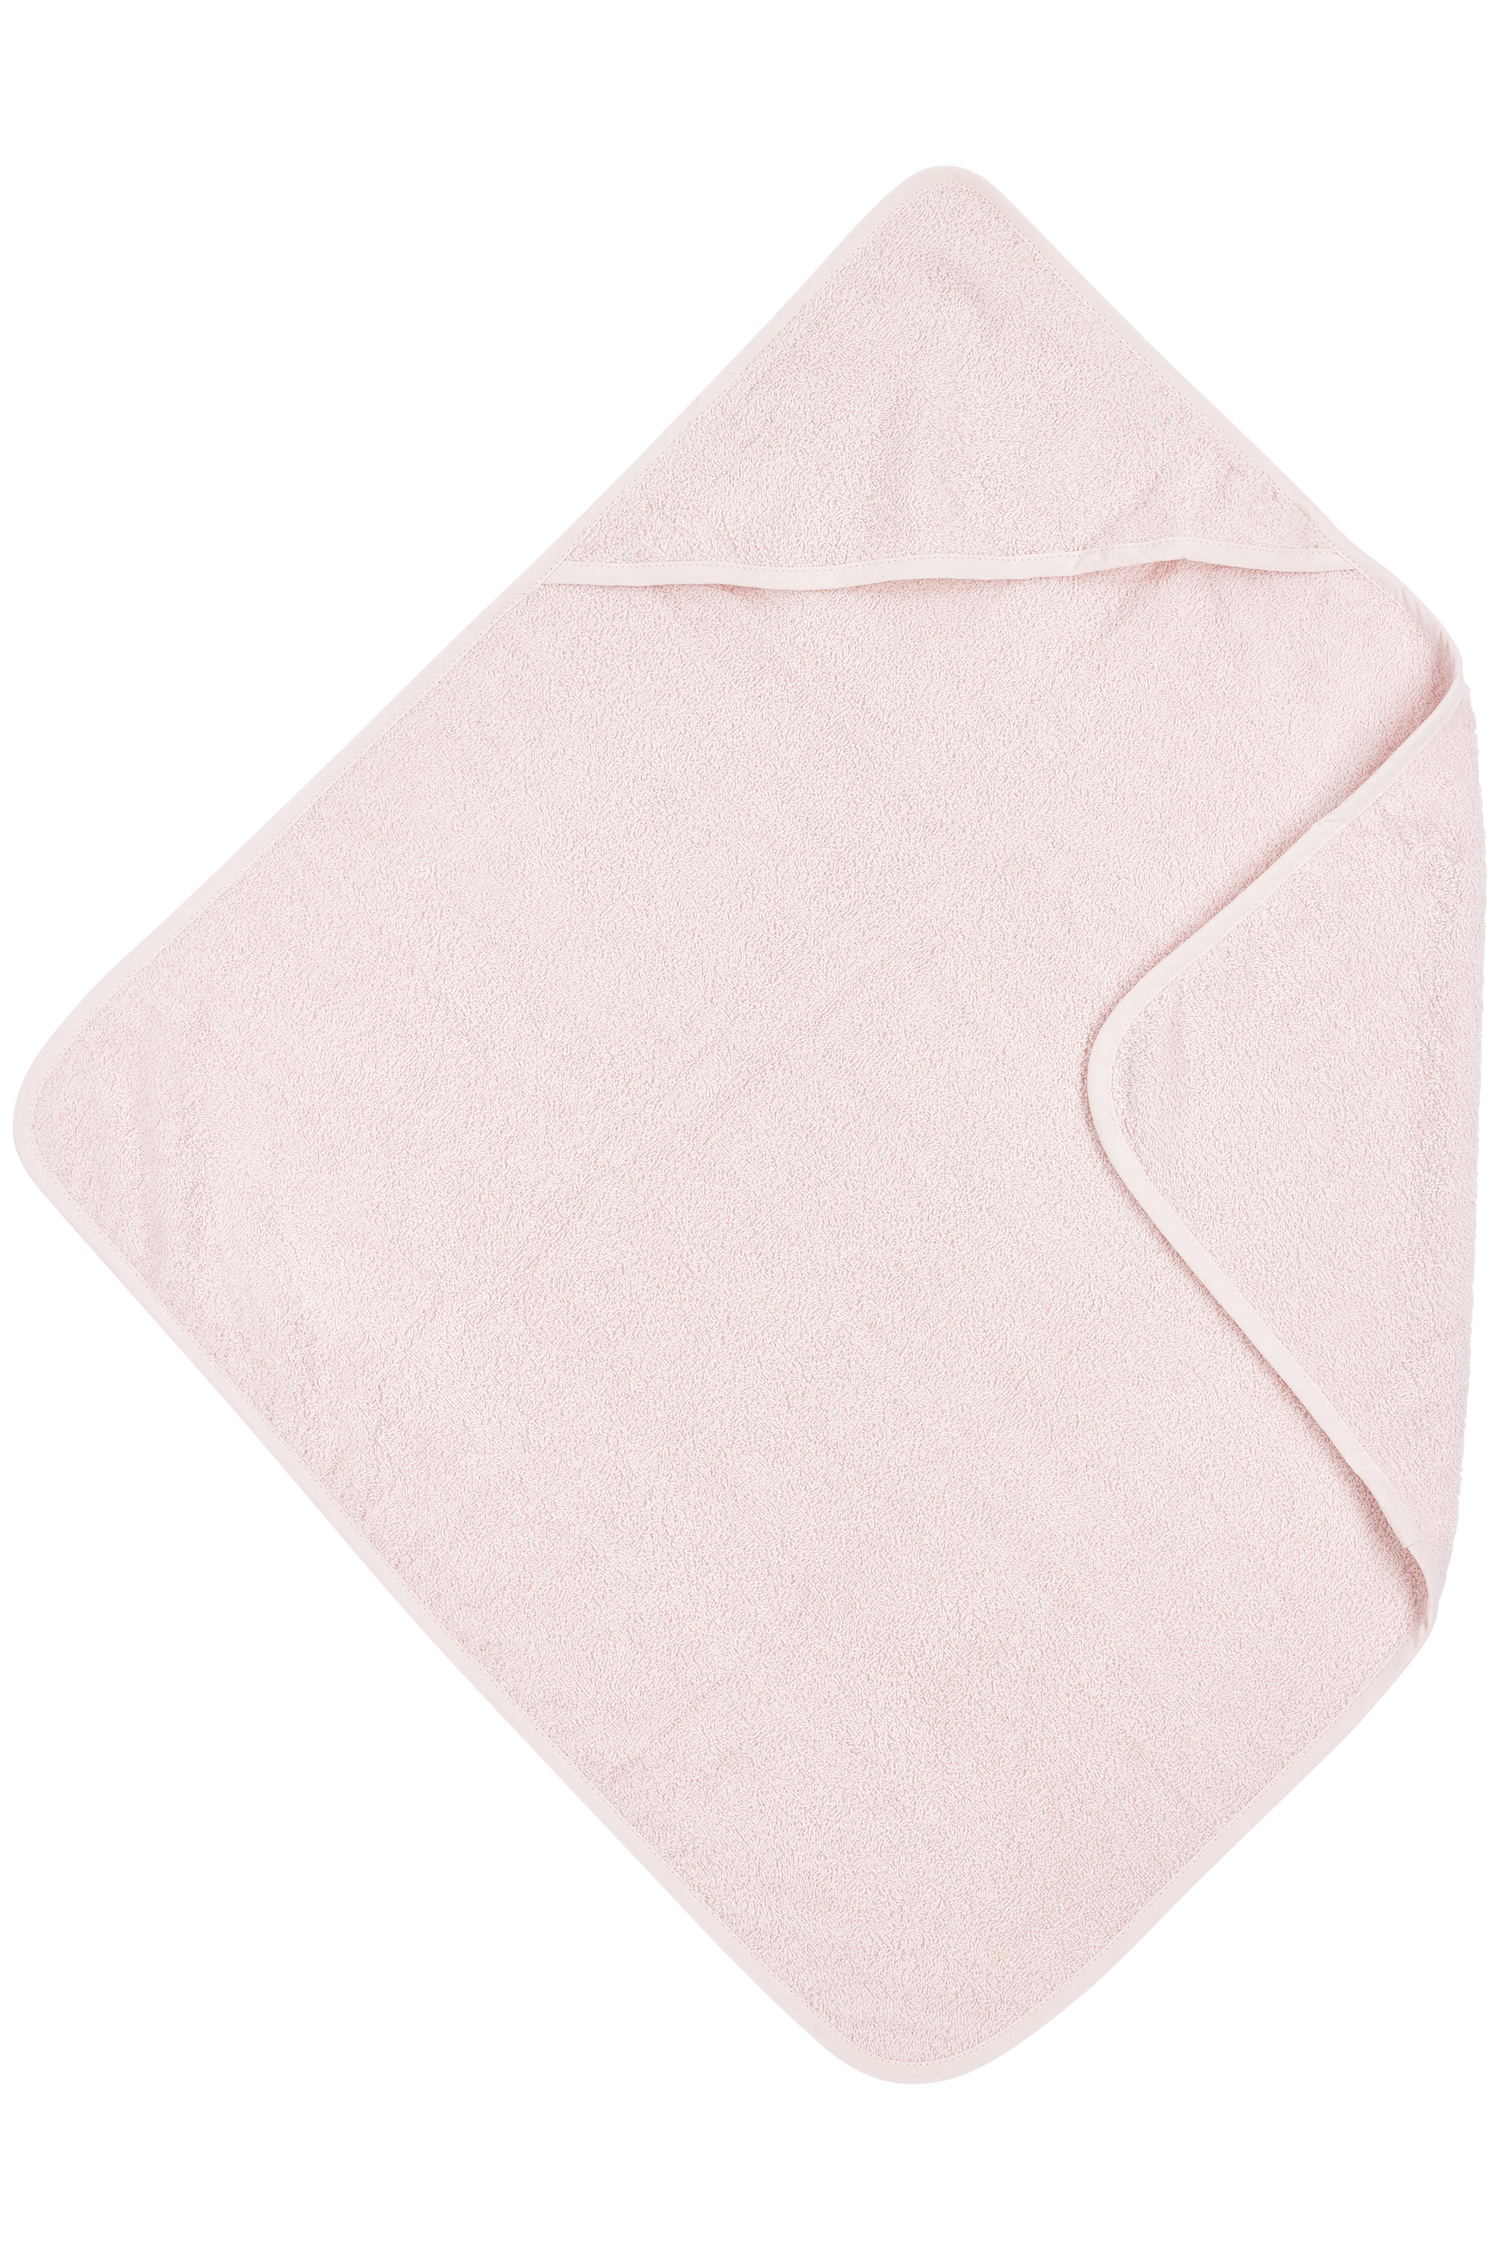 Bathcape Basic Terry - Light Pink - 75x75cm